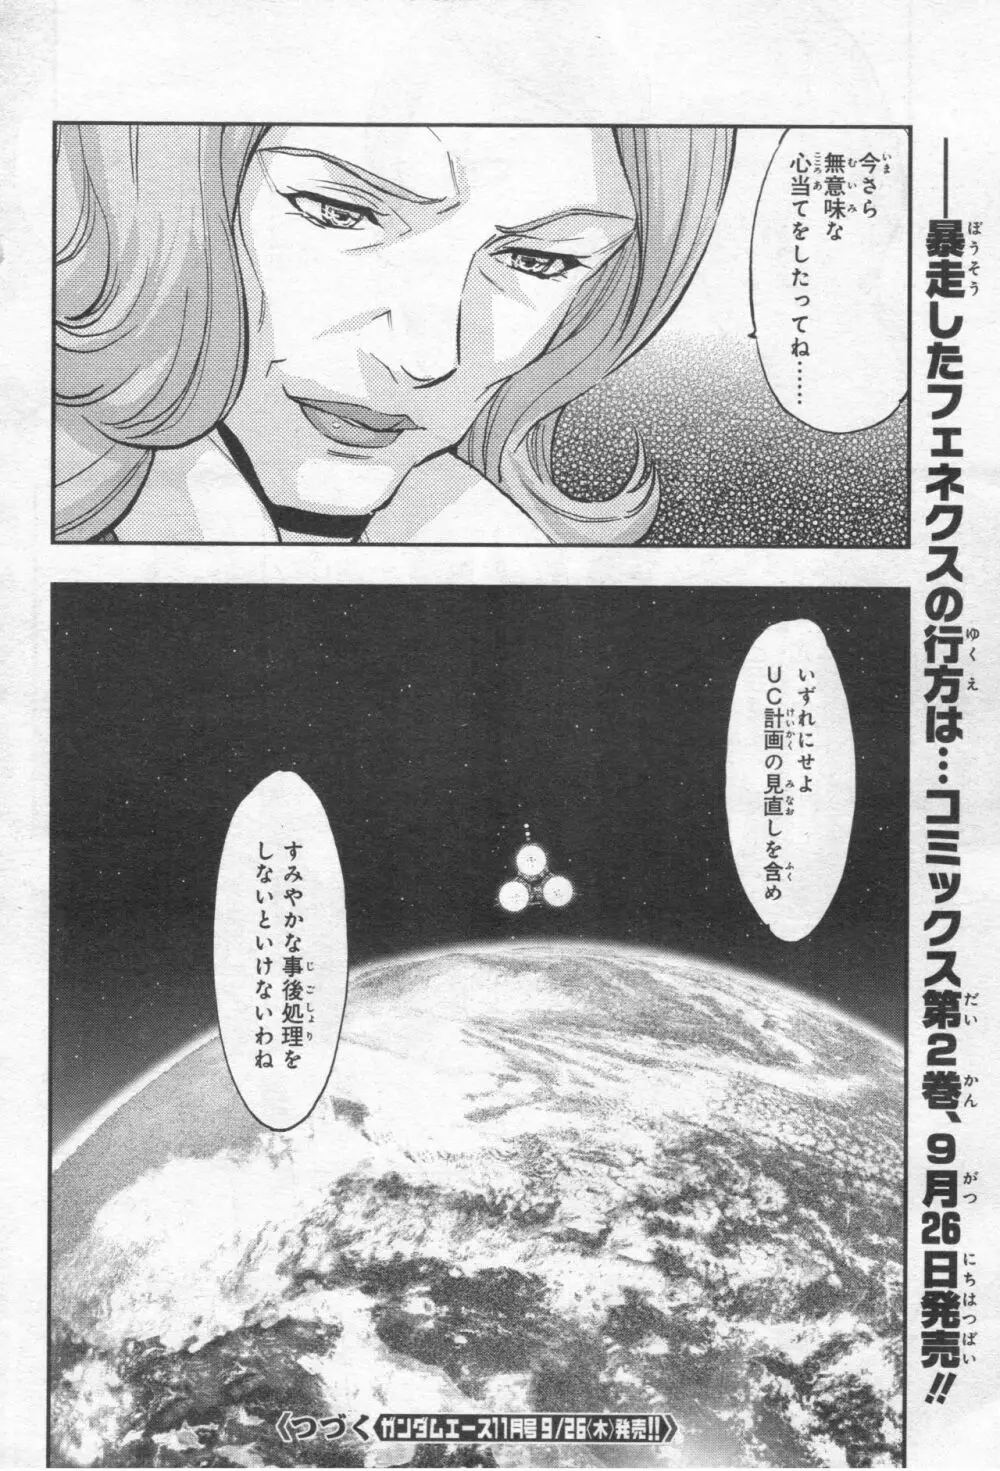 Gundam Ace – October 2019 279ページ